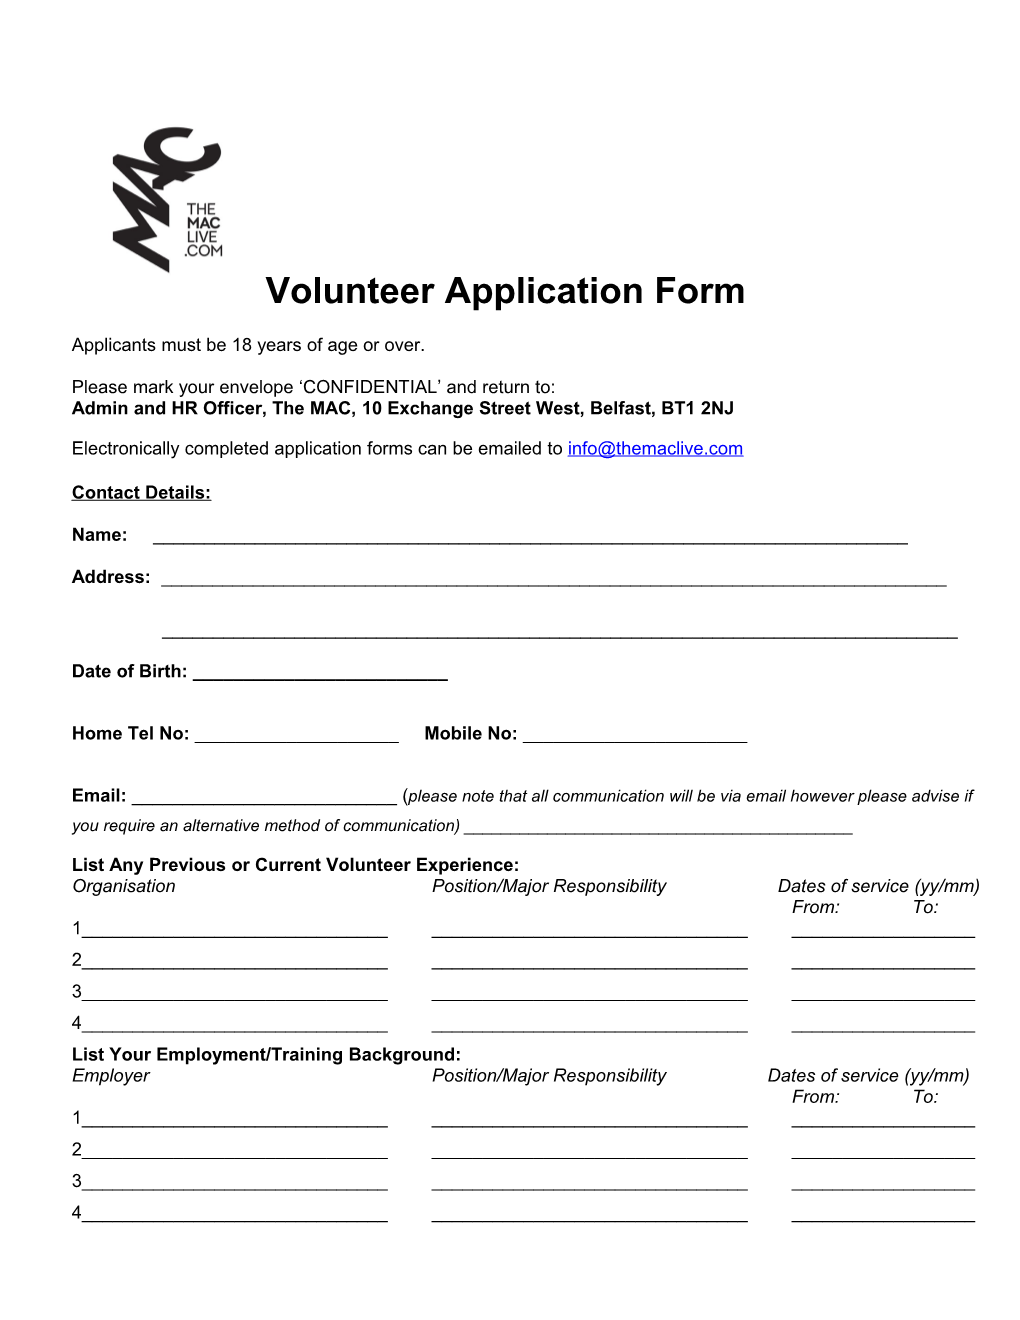 Volunteer Application Form Template